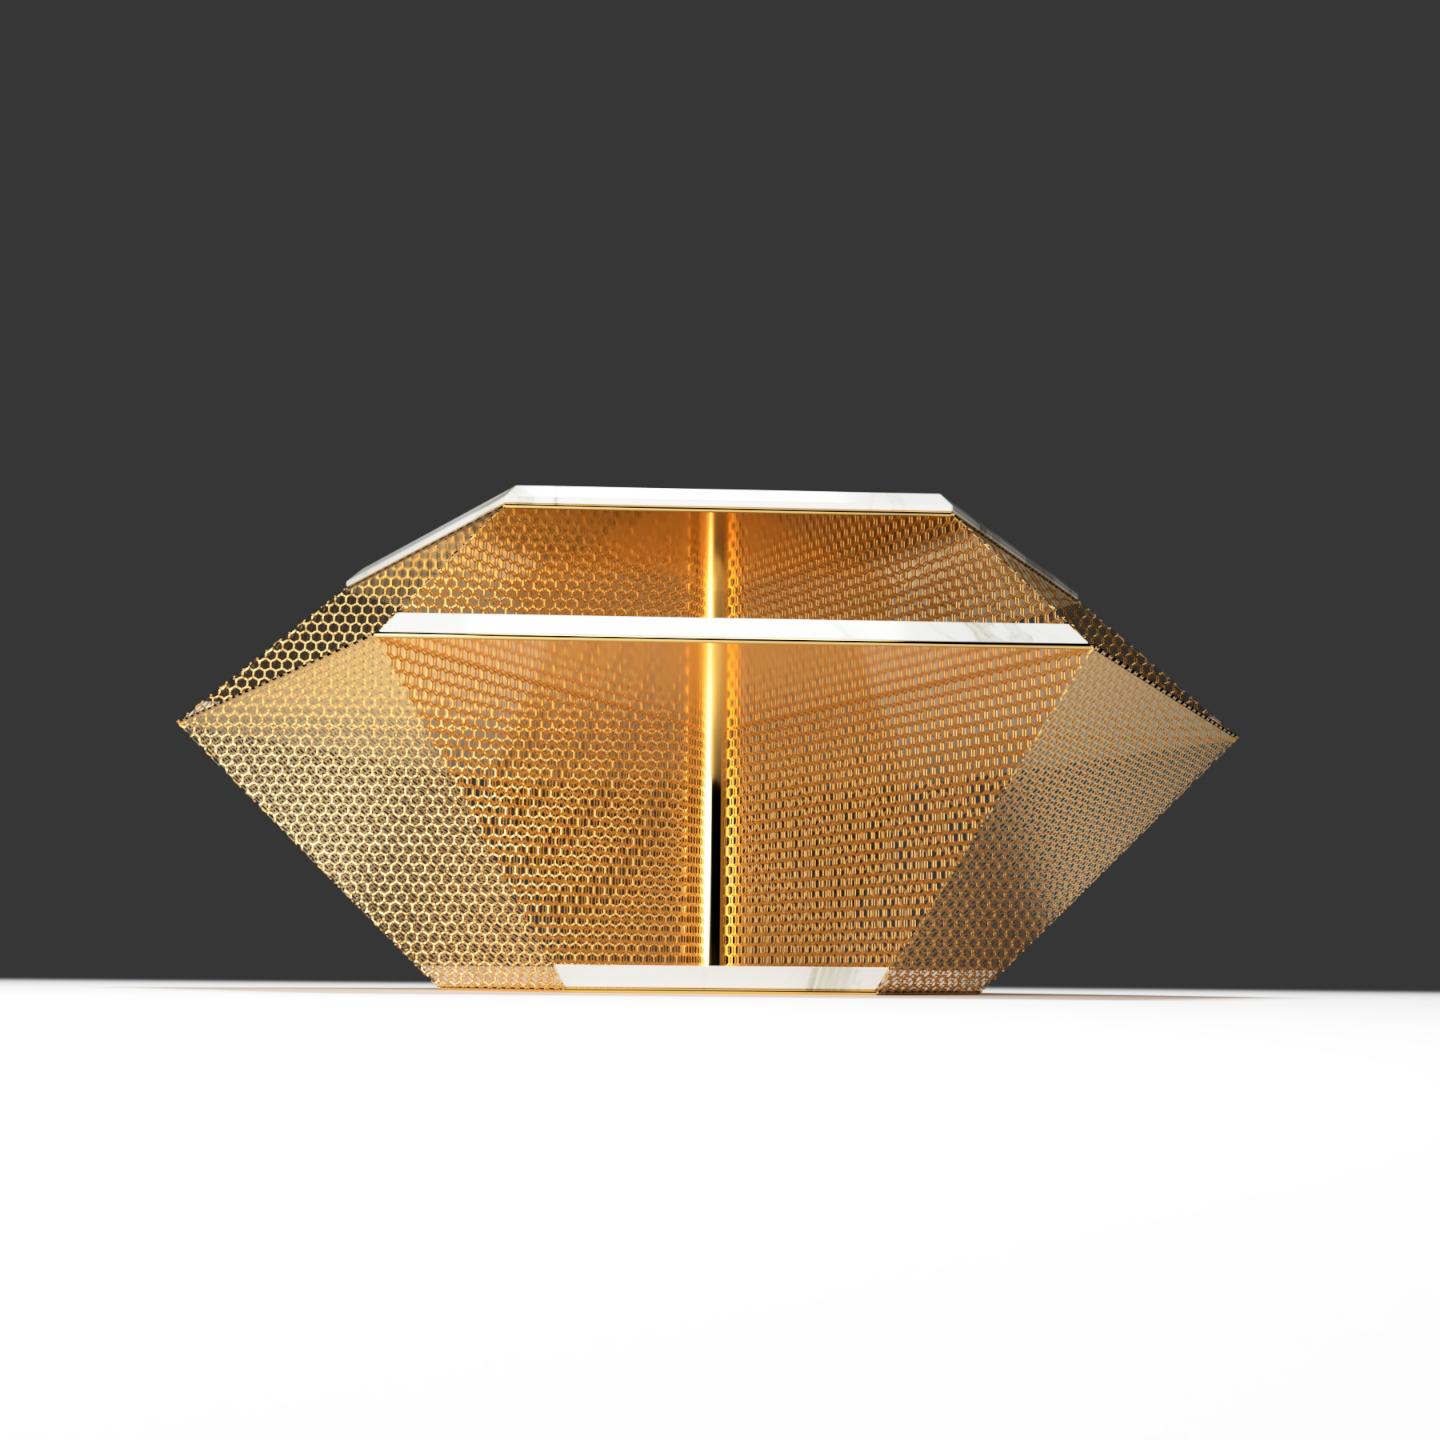 Modern Rough Diamond Center Table, 1 of 1 by Grzegorz Majka For Sale